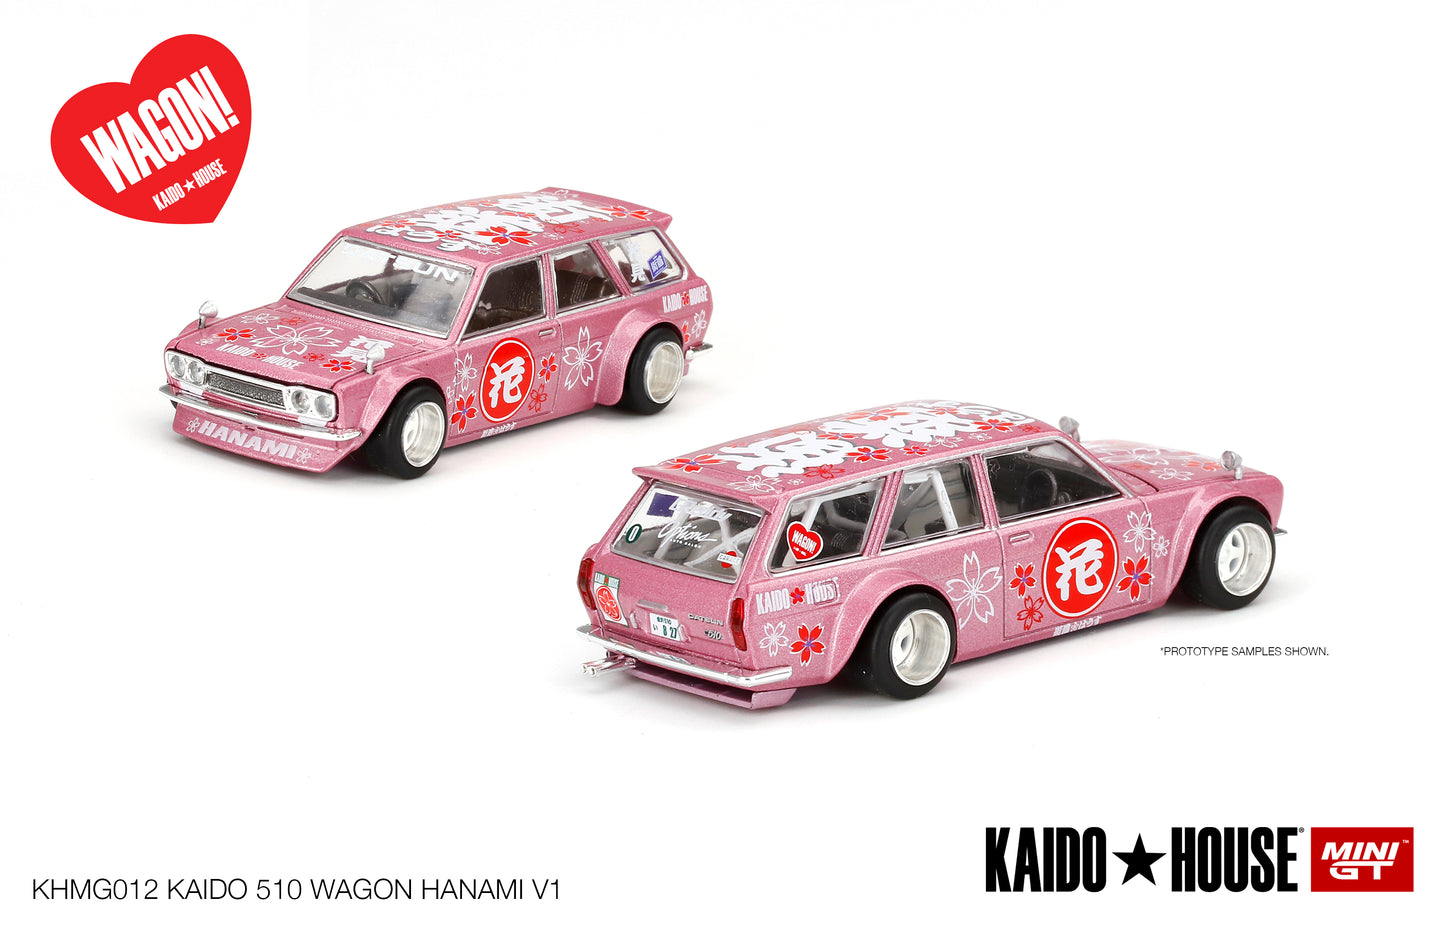 Mini GT Kaido House 012 Datsun KAIDO 510 Wagon Hanami V1 Pink 1:64